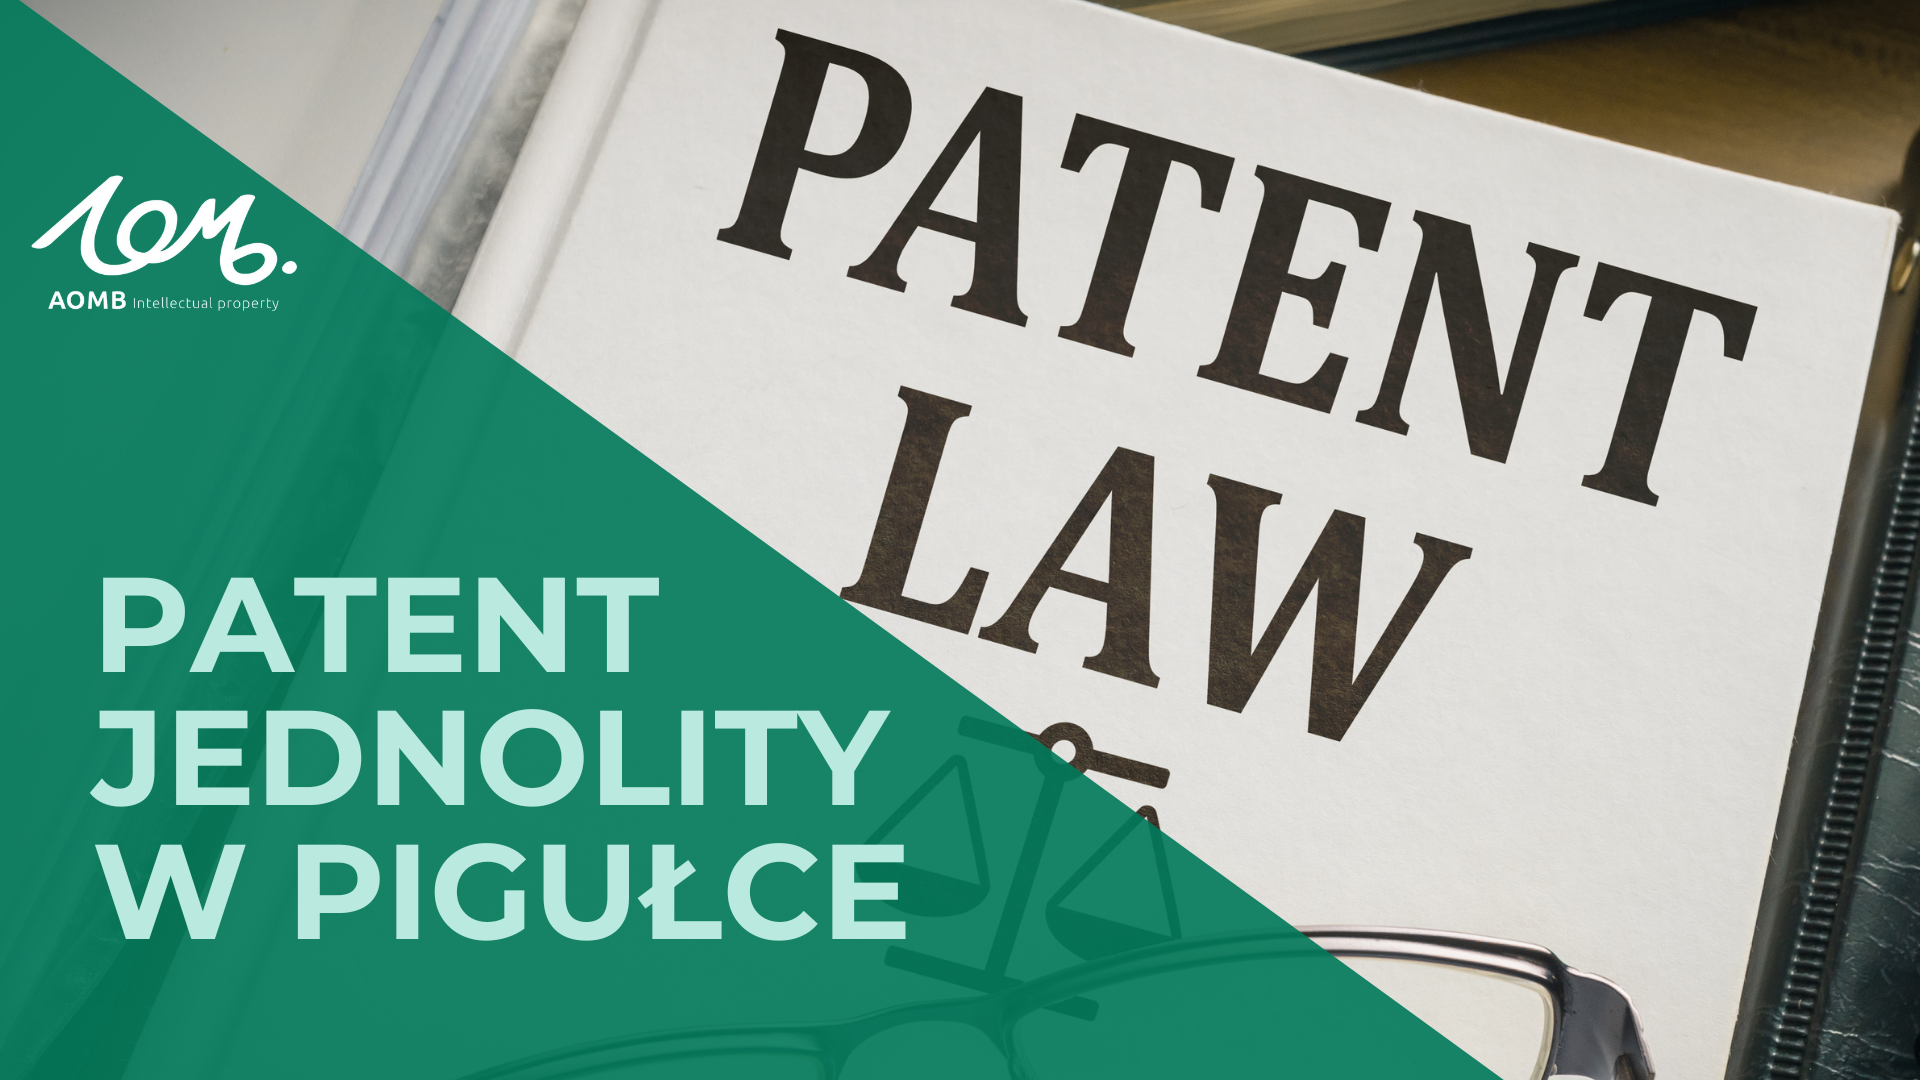 Patent jednolity w pigułce